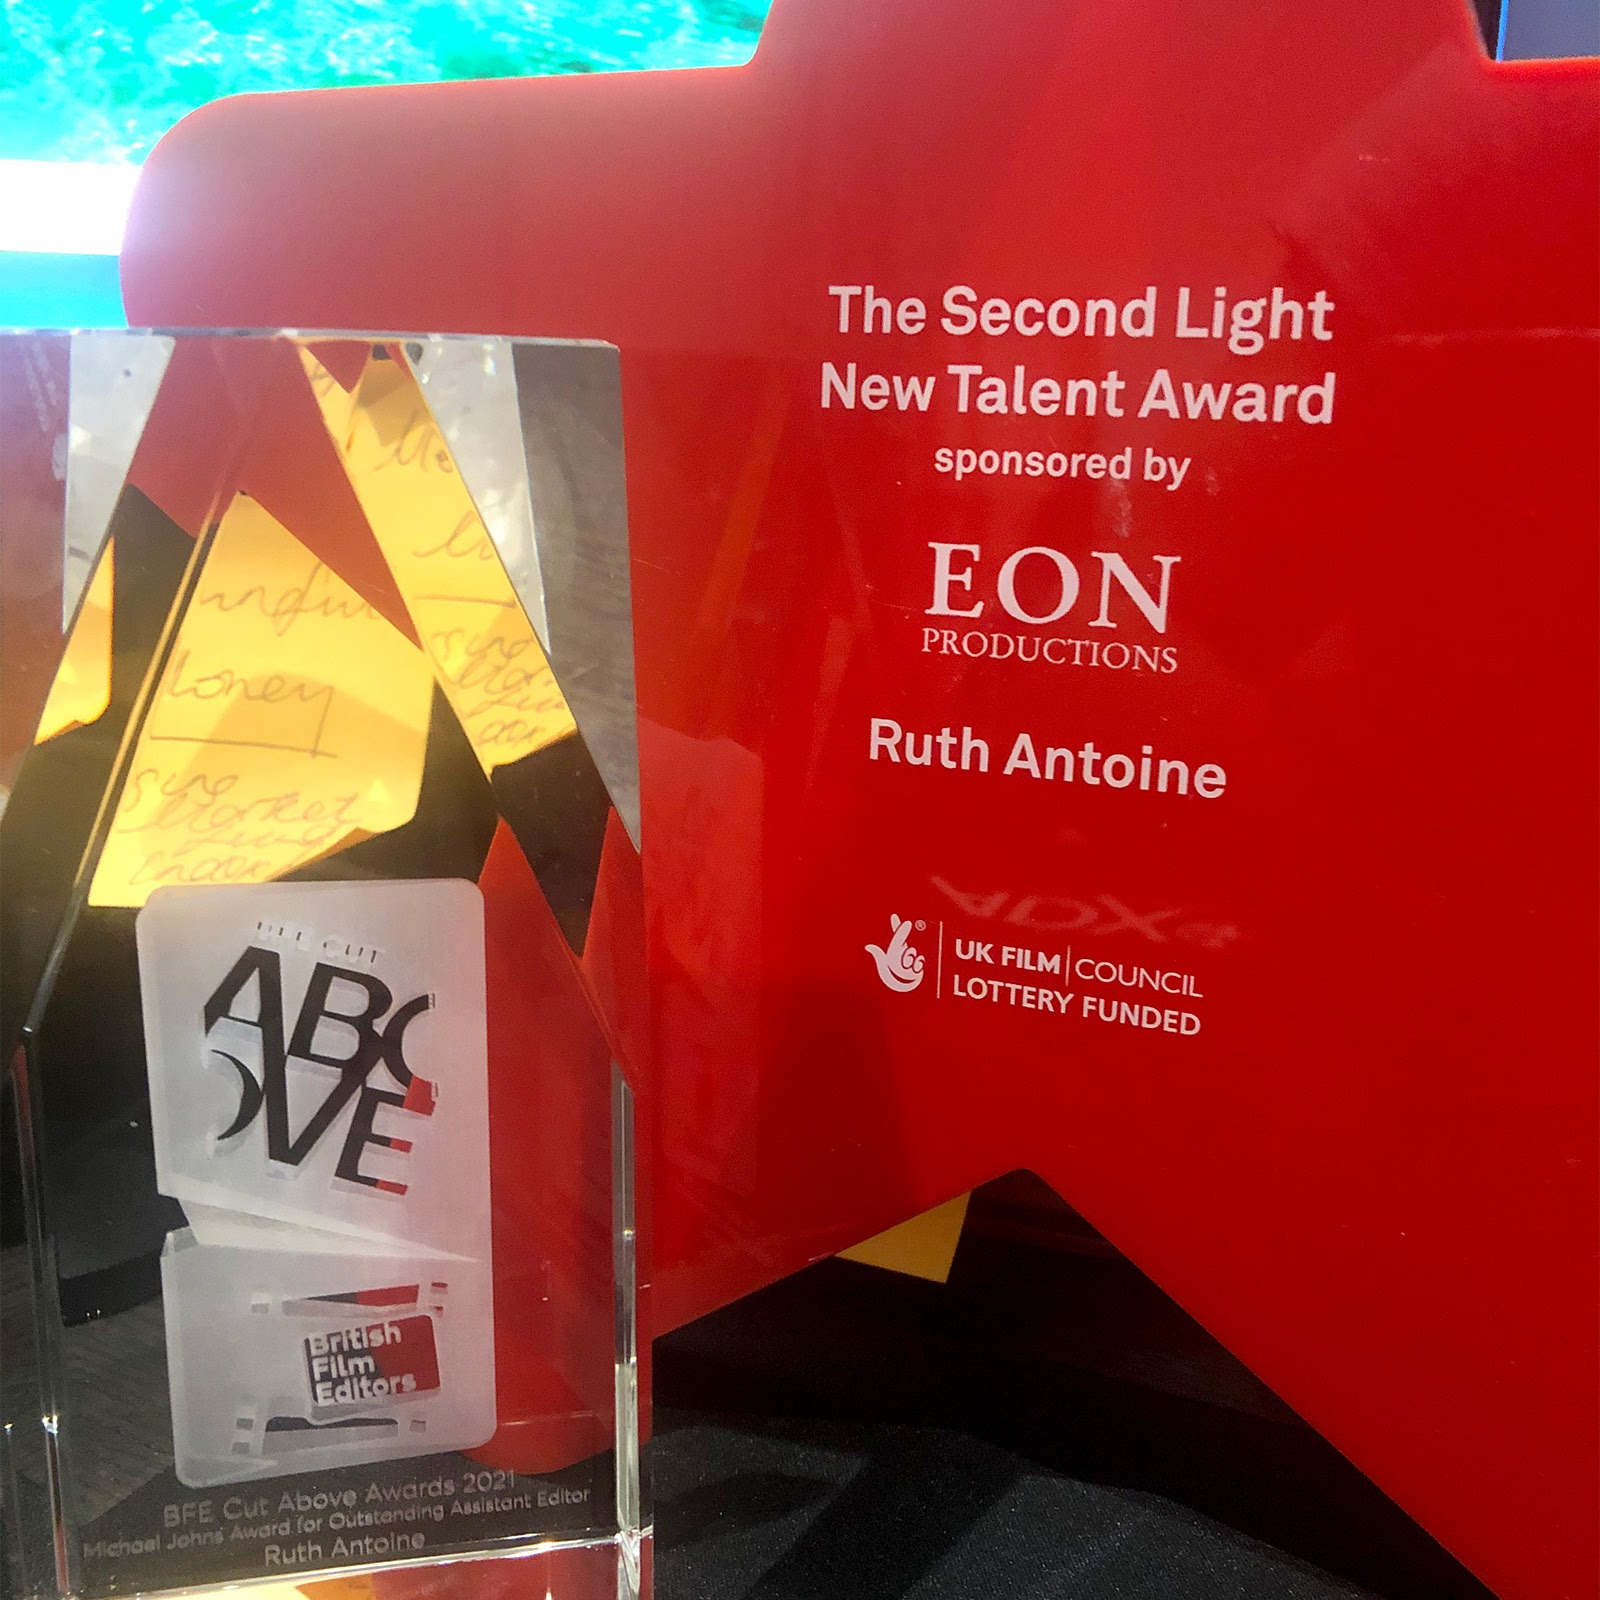 Ruth Antoine's awards